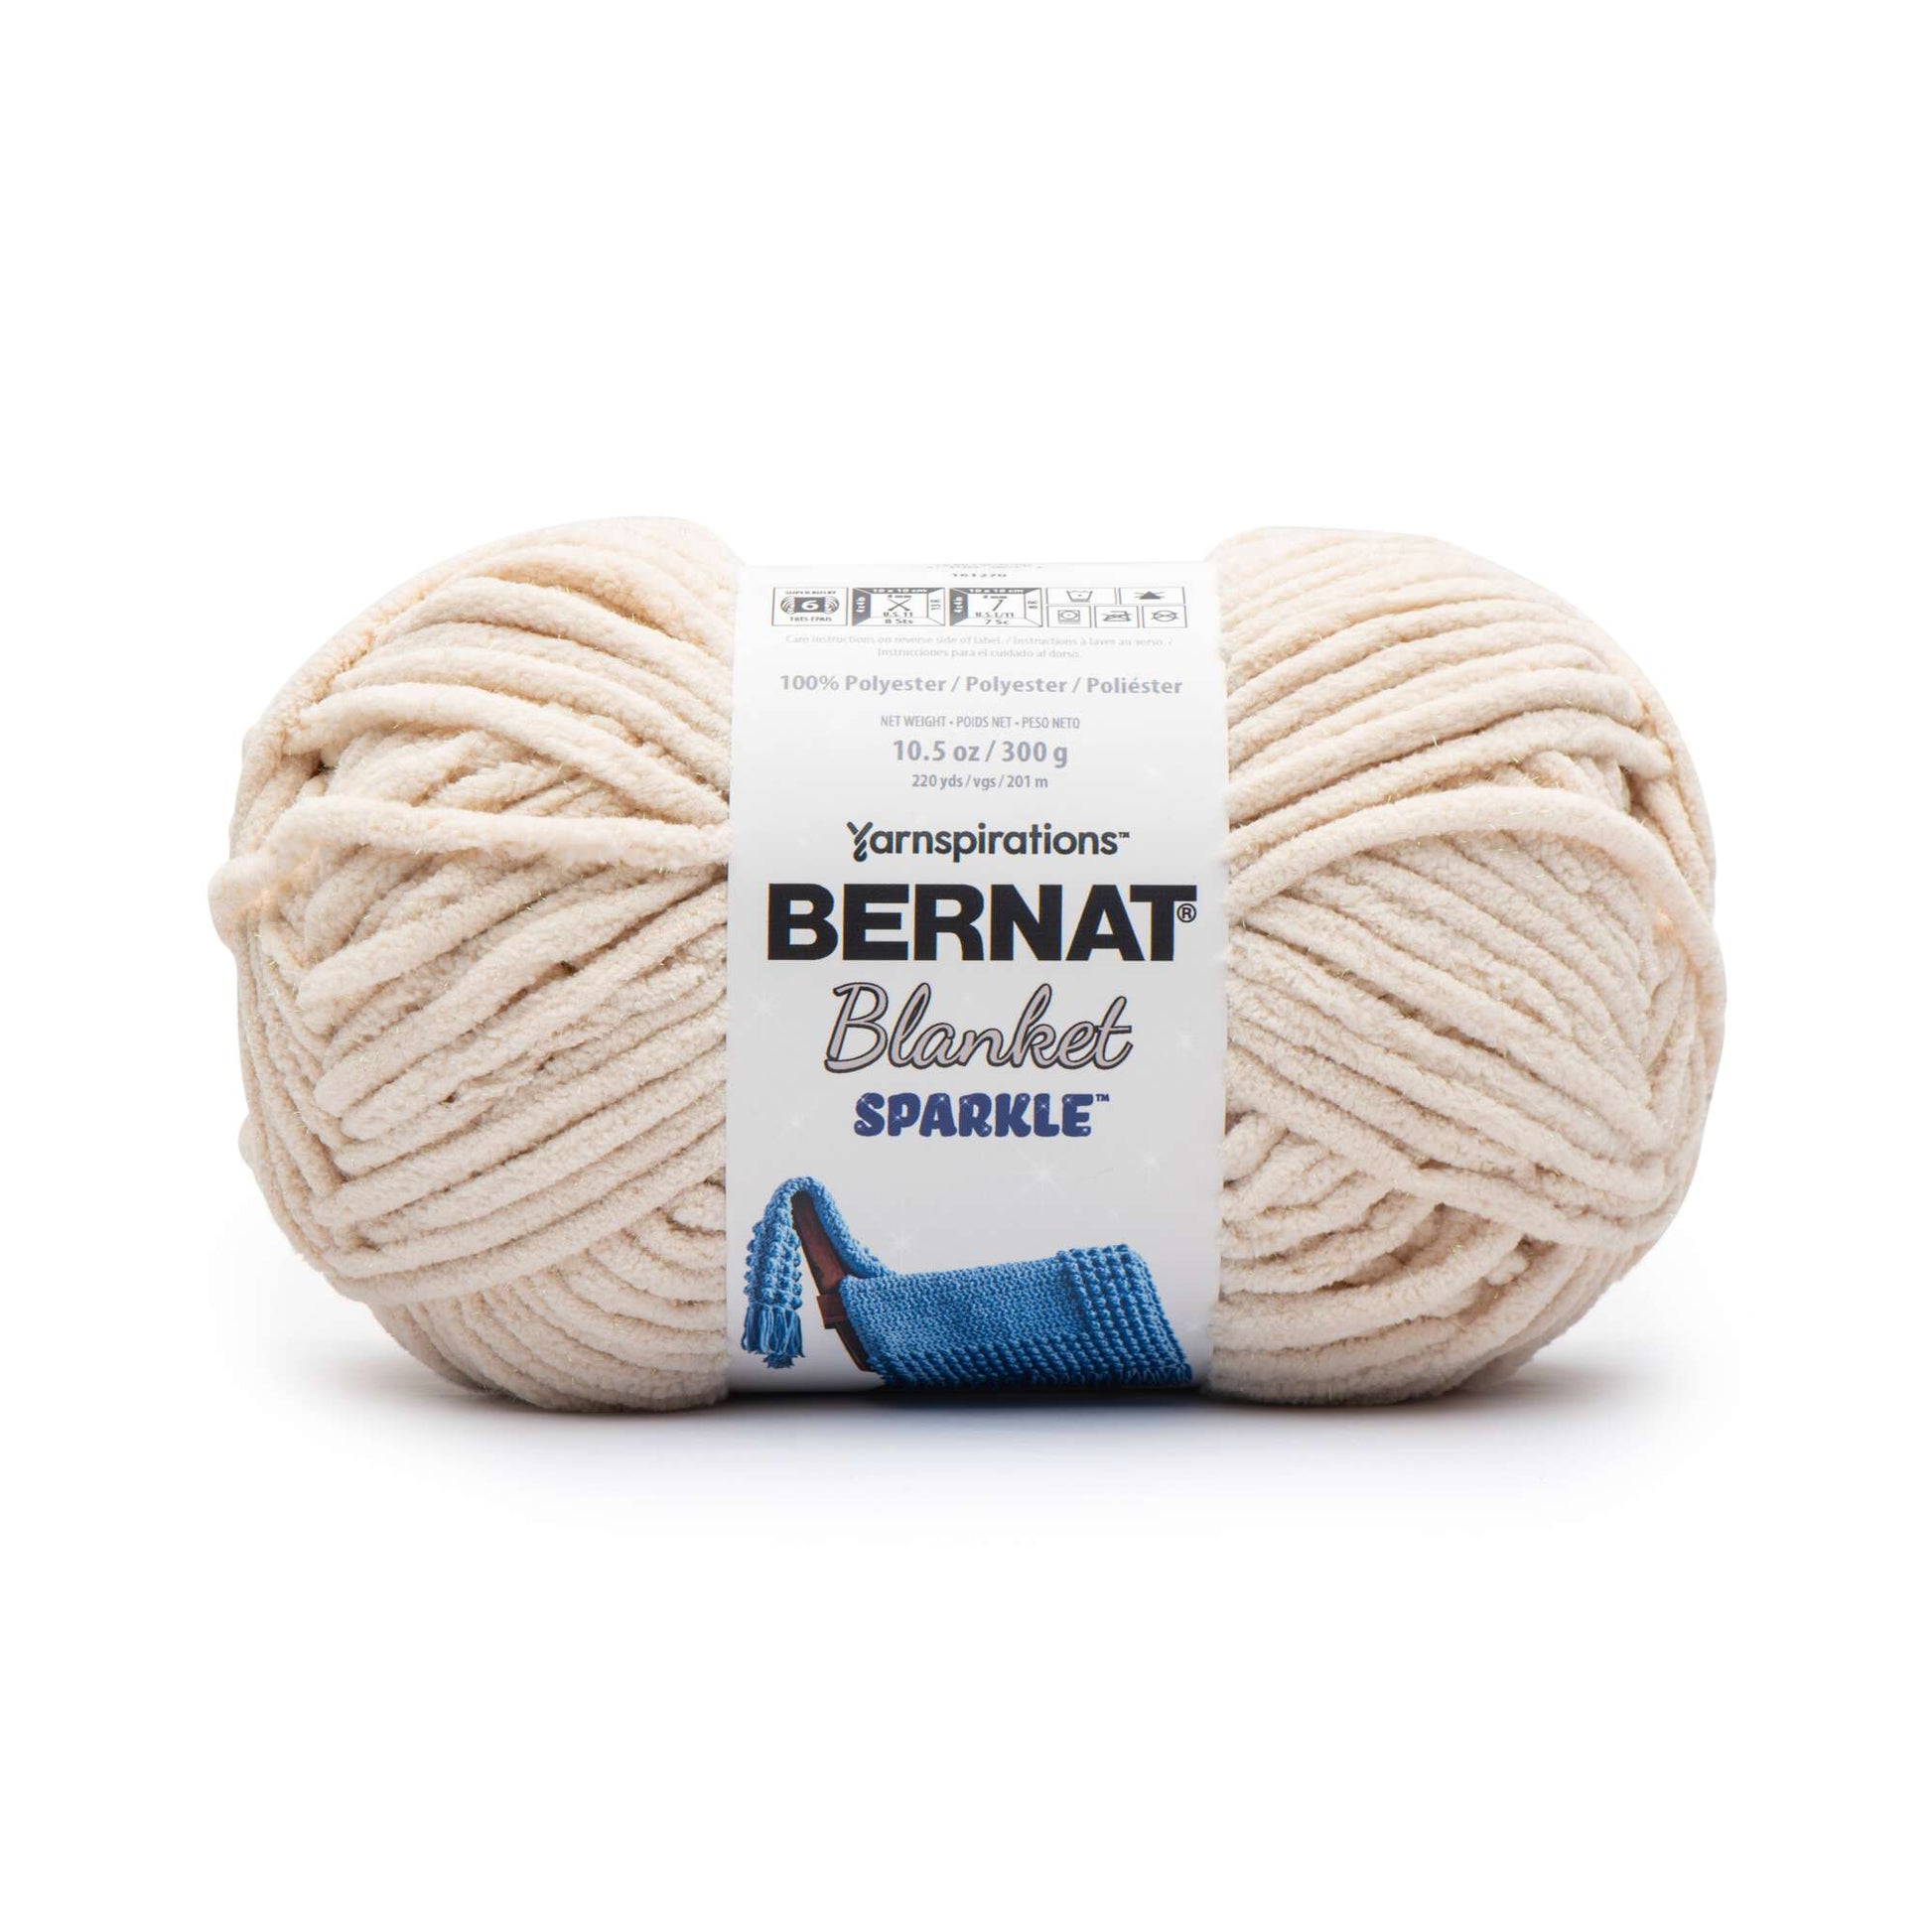 Bernat Blanket Sparkle Yarn (300g/10.5oz) - Discontinued shades